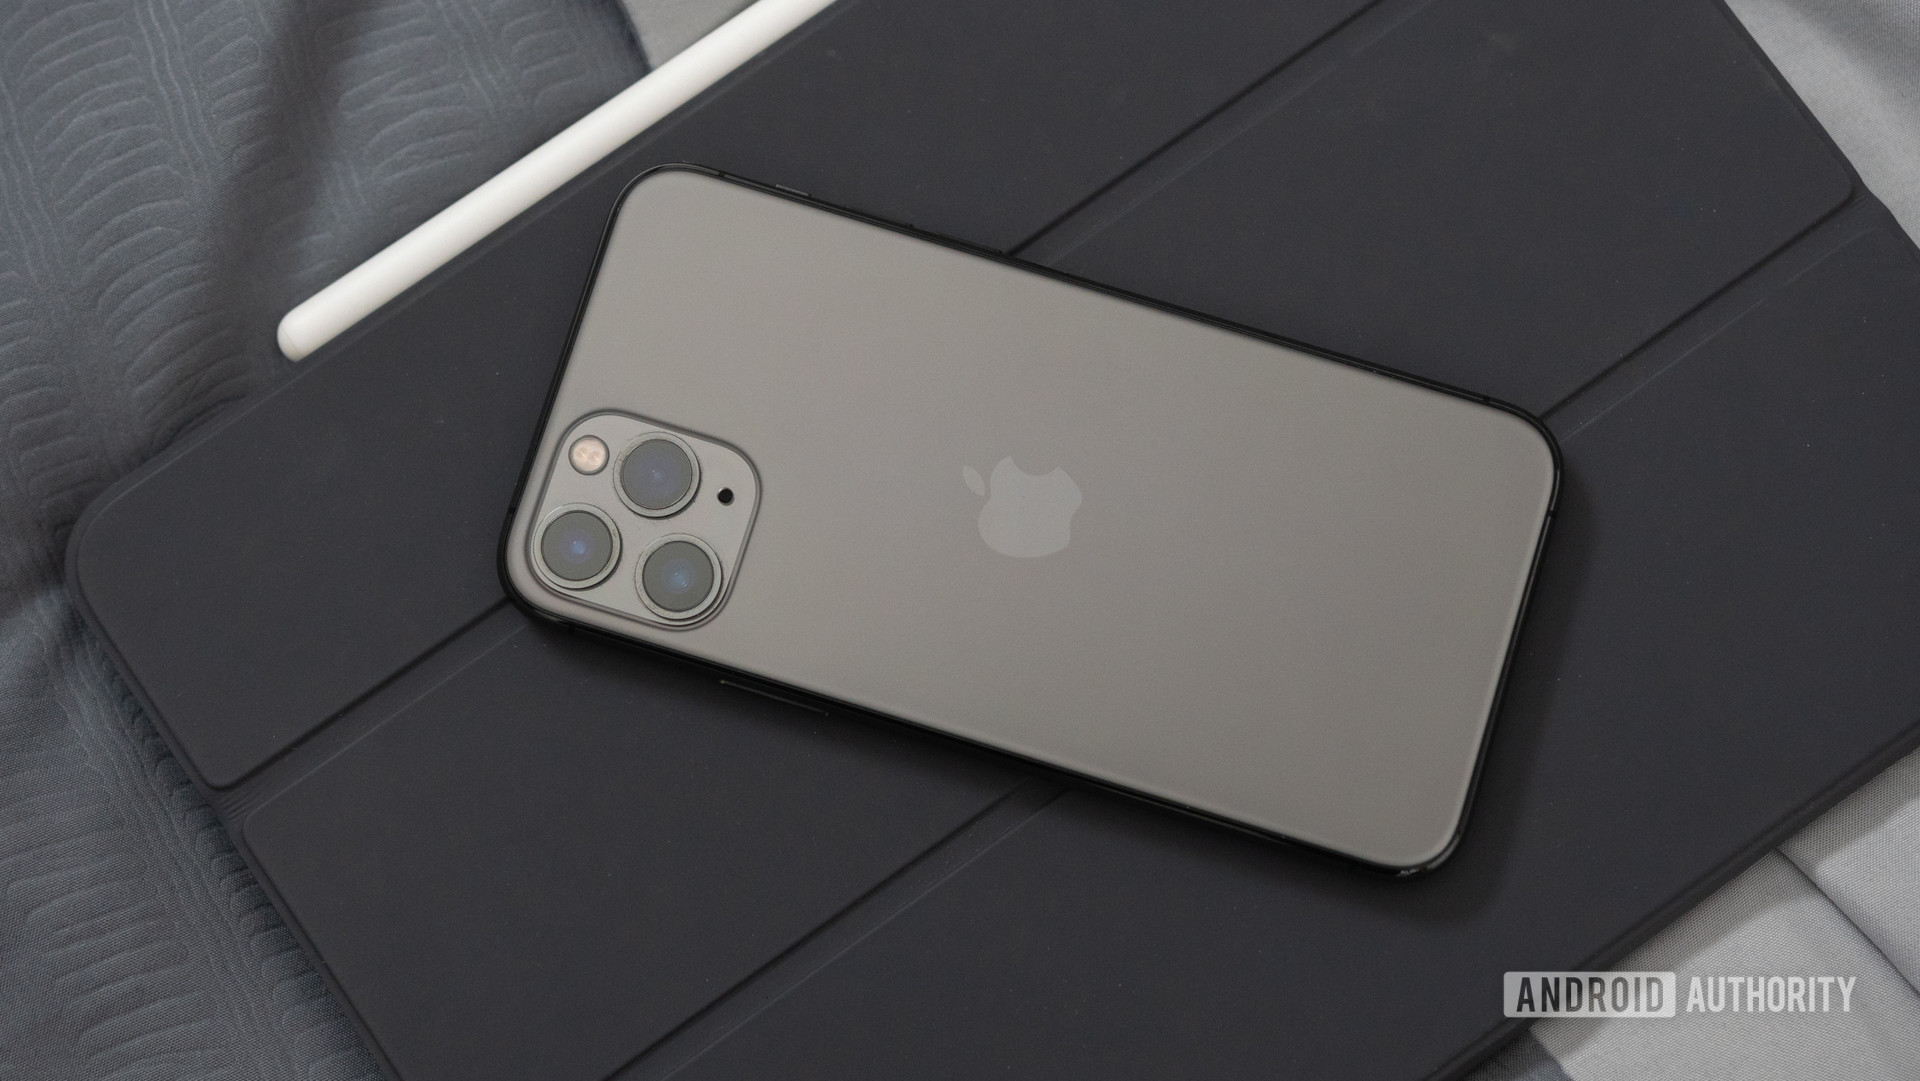 Black iPhone 11 Pro on a gray iPad Pro